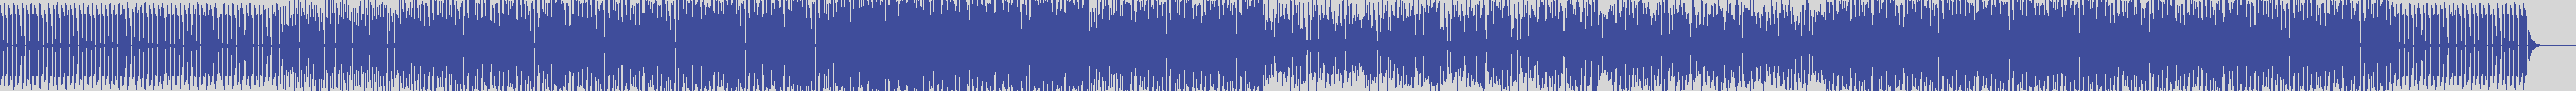 atomic_recordings [AR020] Jeff Jackson - I Let You Go [Original Mix] audio wave form